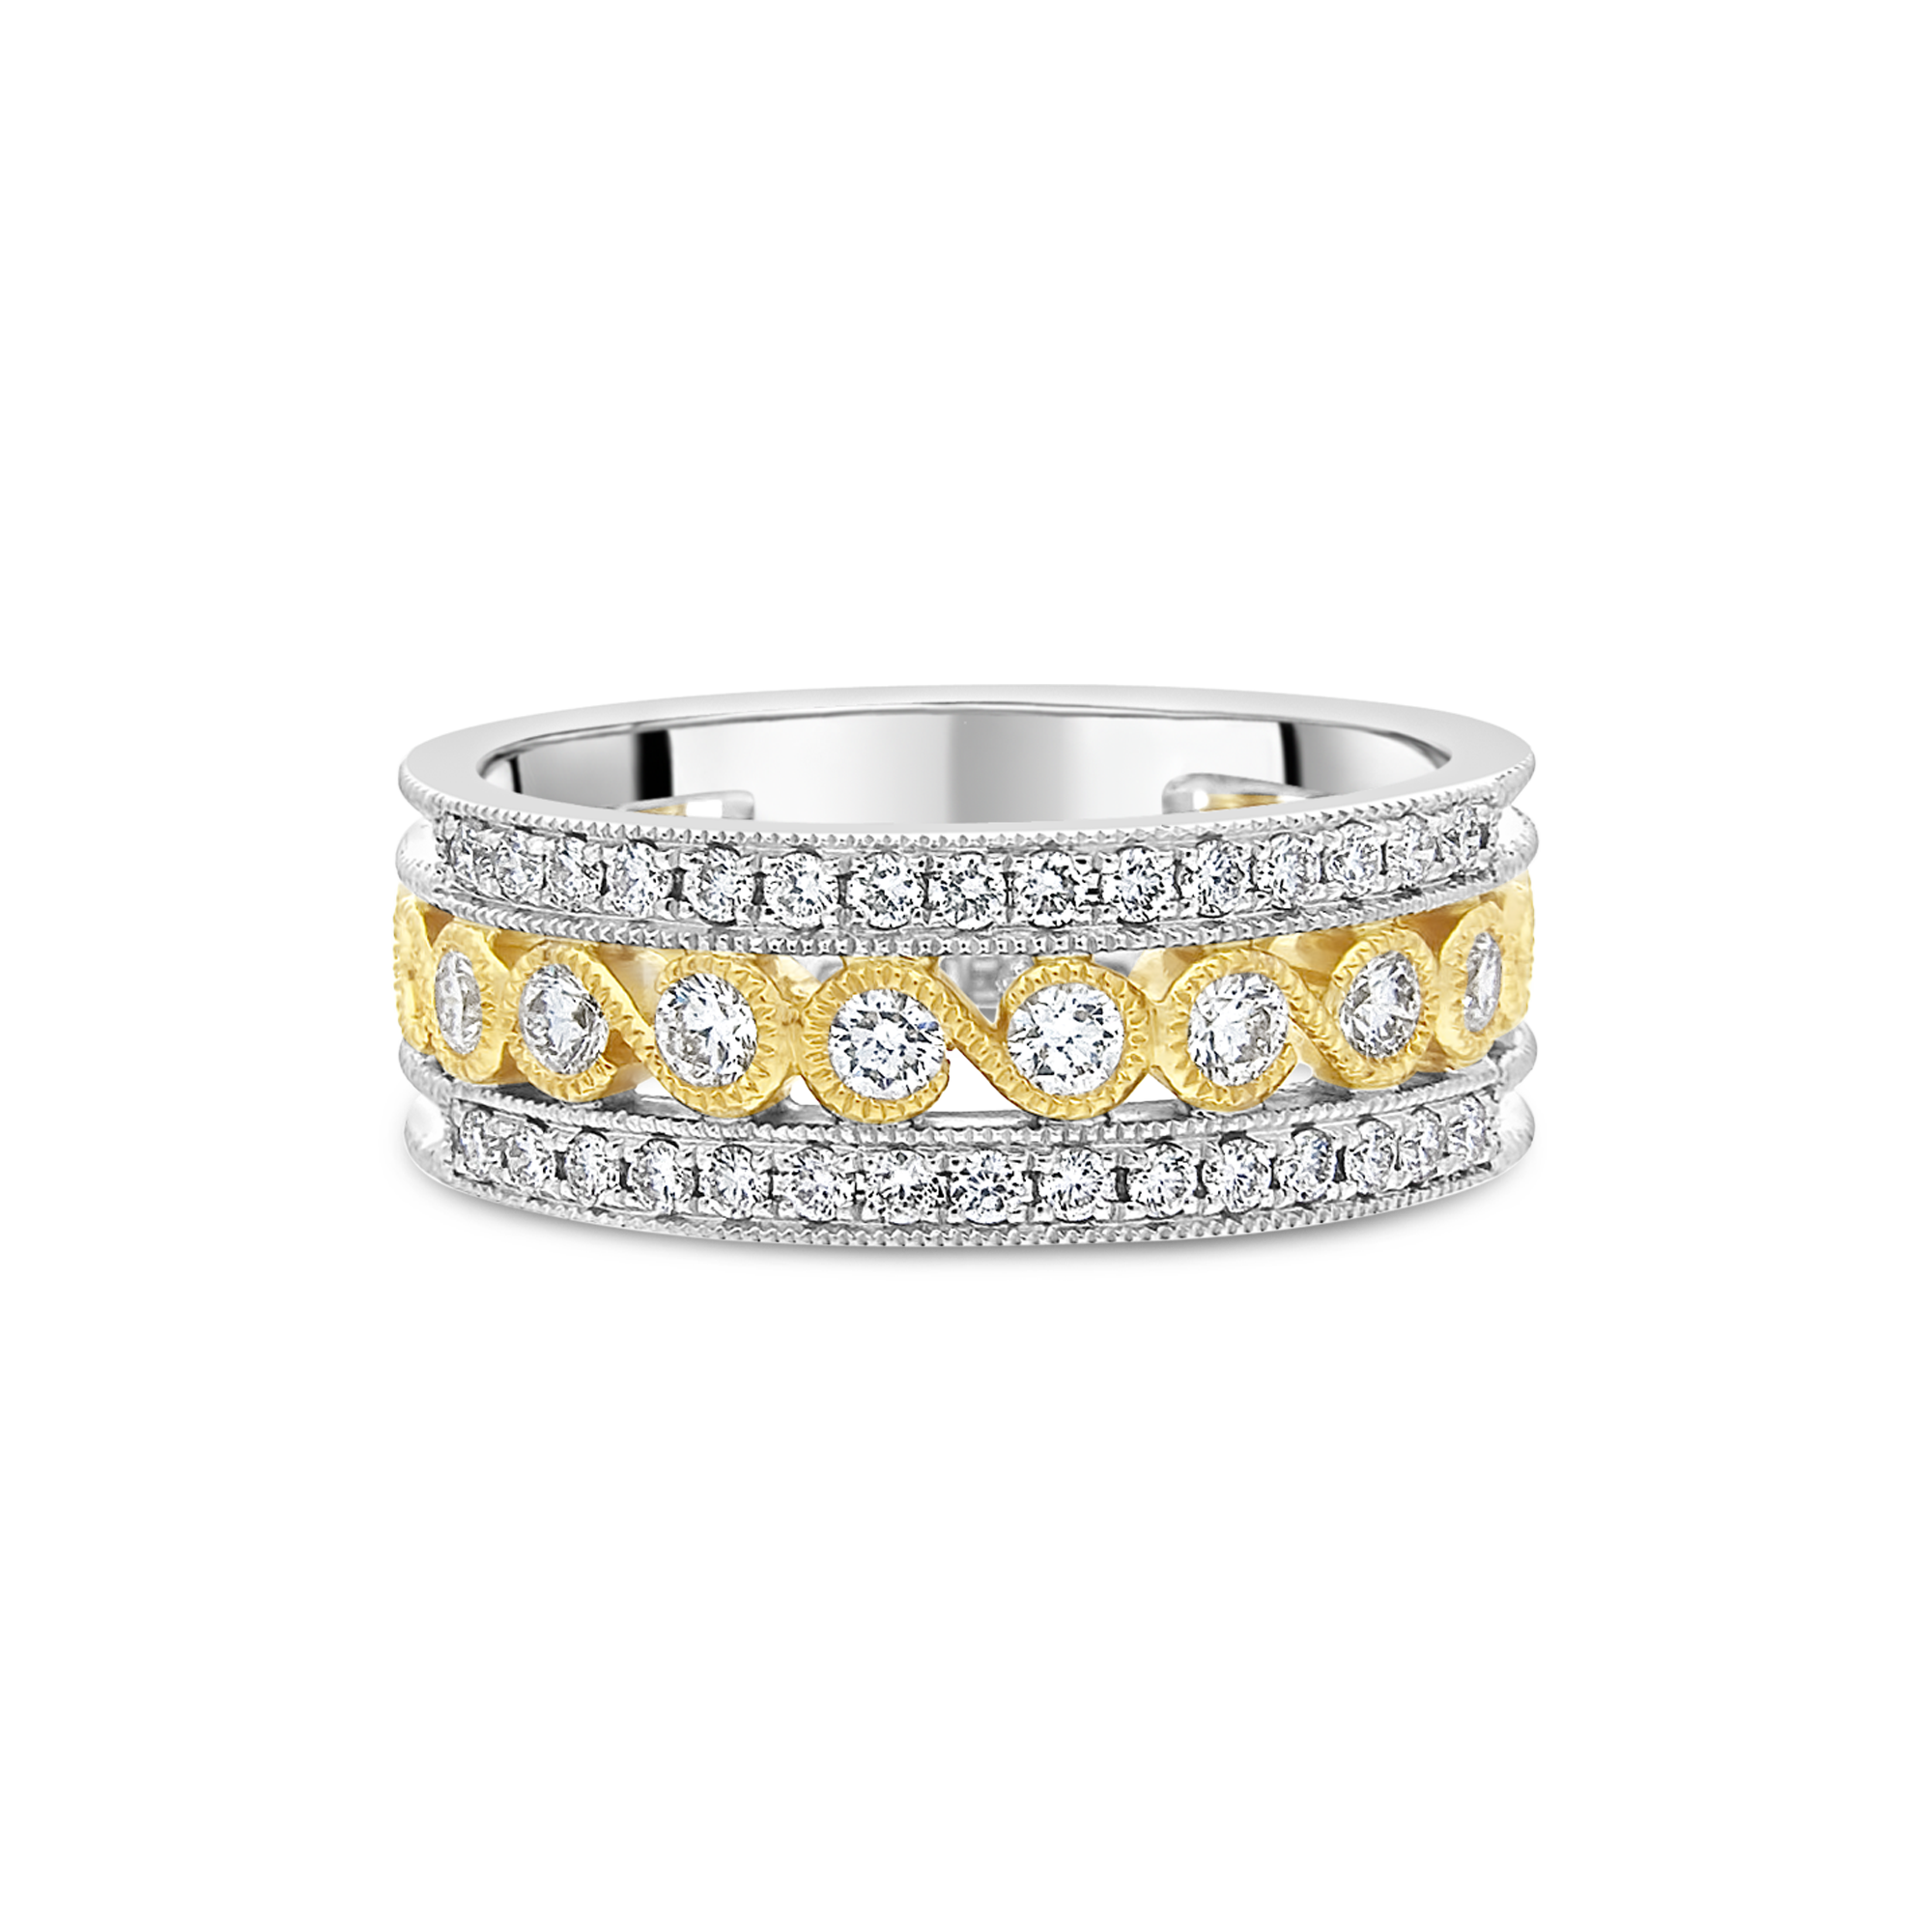 18ct Yellow Gold and Platinum Diamond Dress Ring